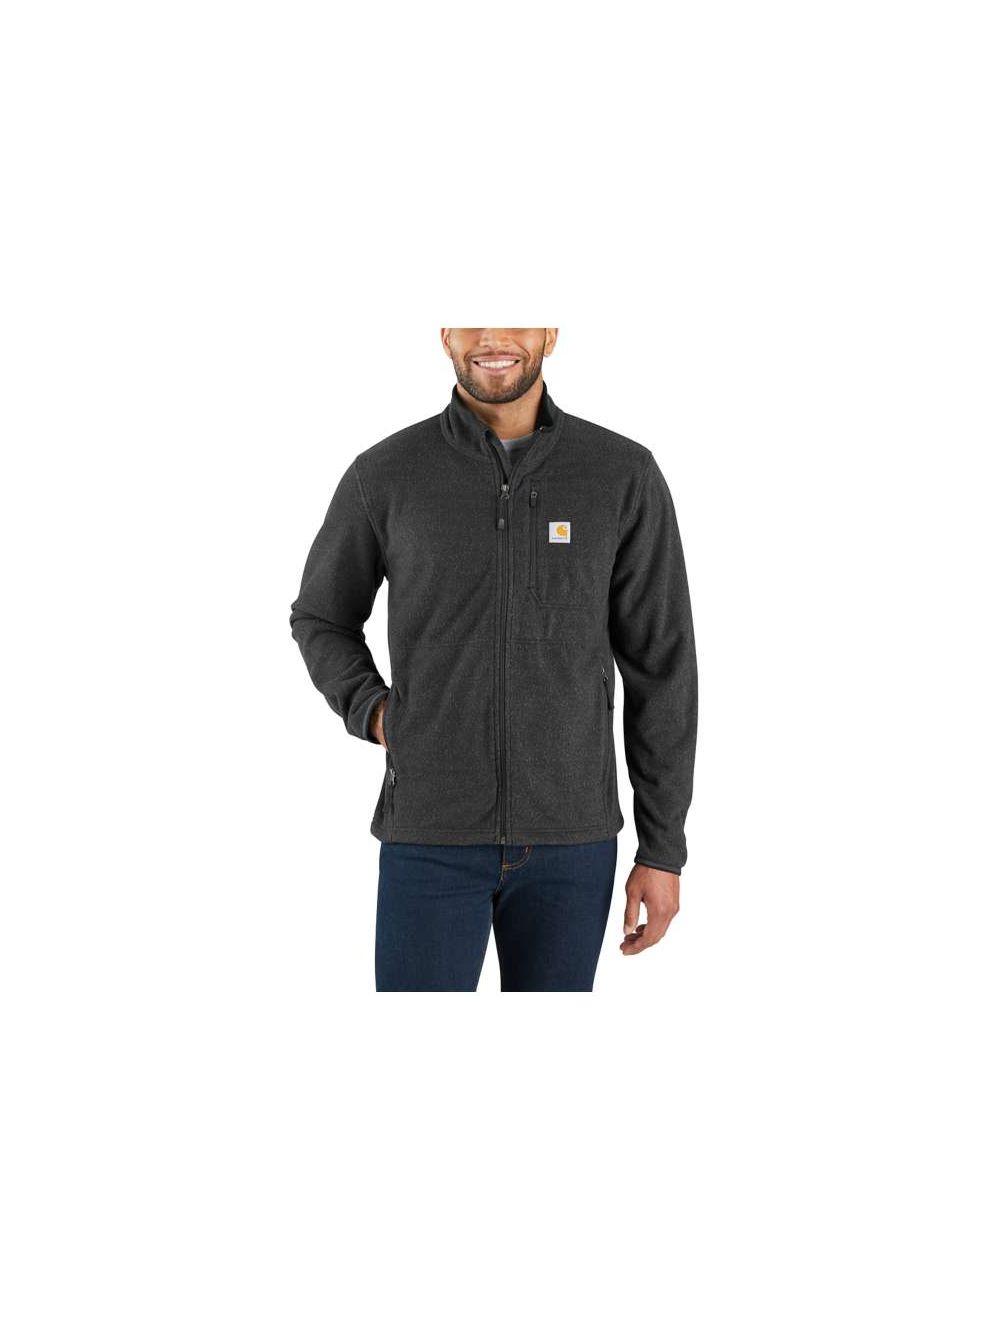 Carhartt Men's Dalton Full-Zip Fleece Jacket